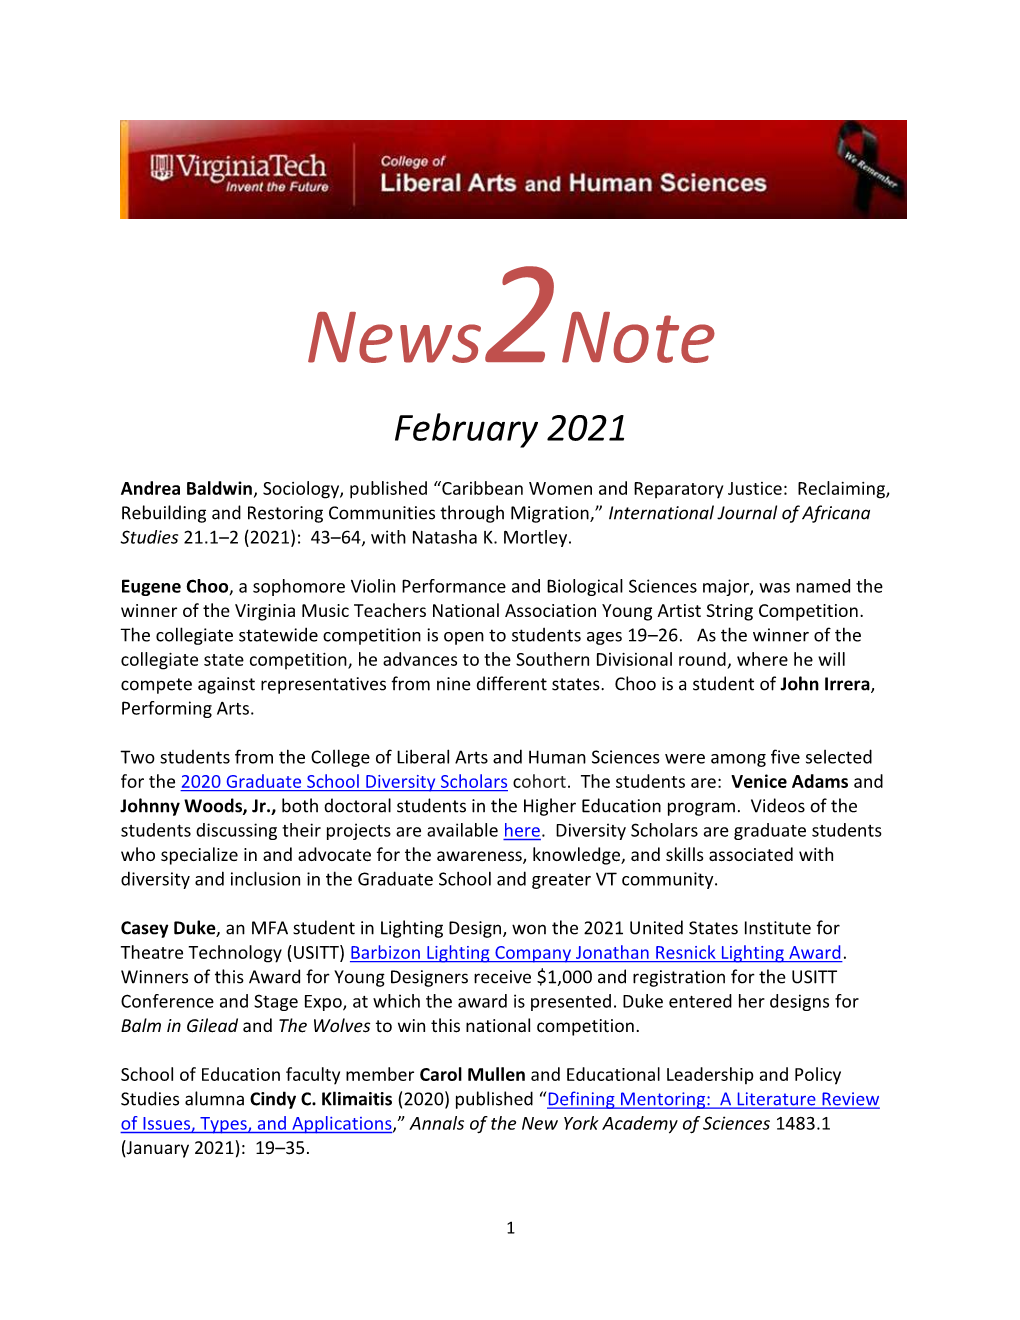 News2note February 2021.Pdf